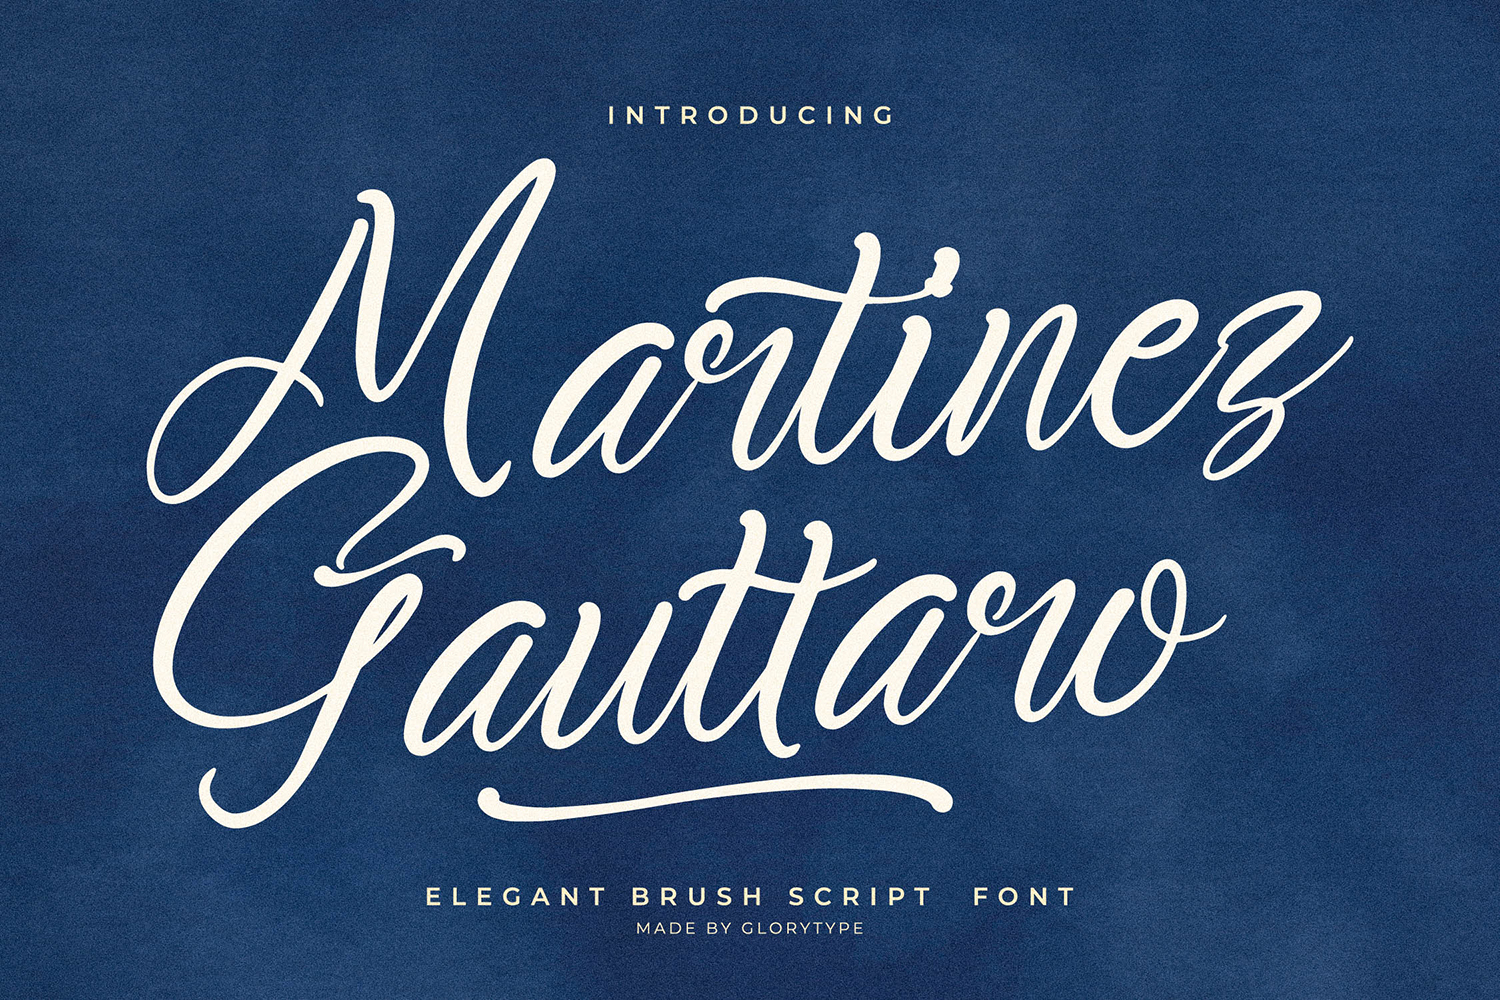 Martinez Gauttaro Free Font